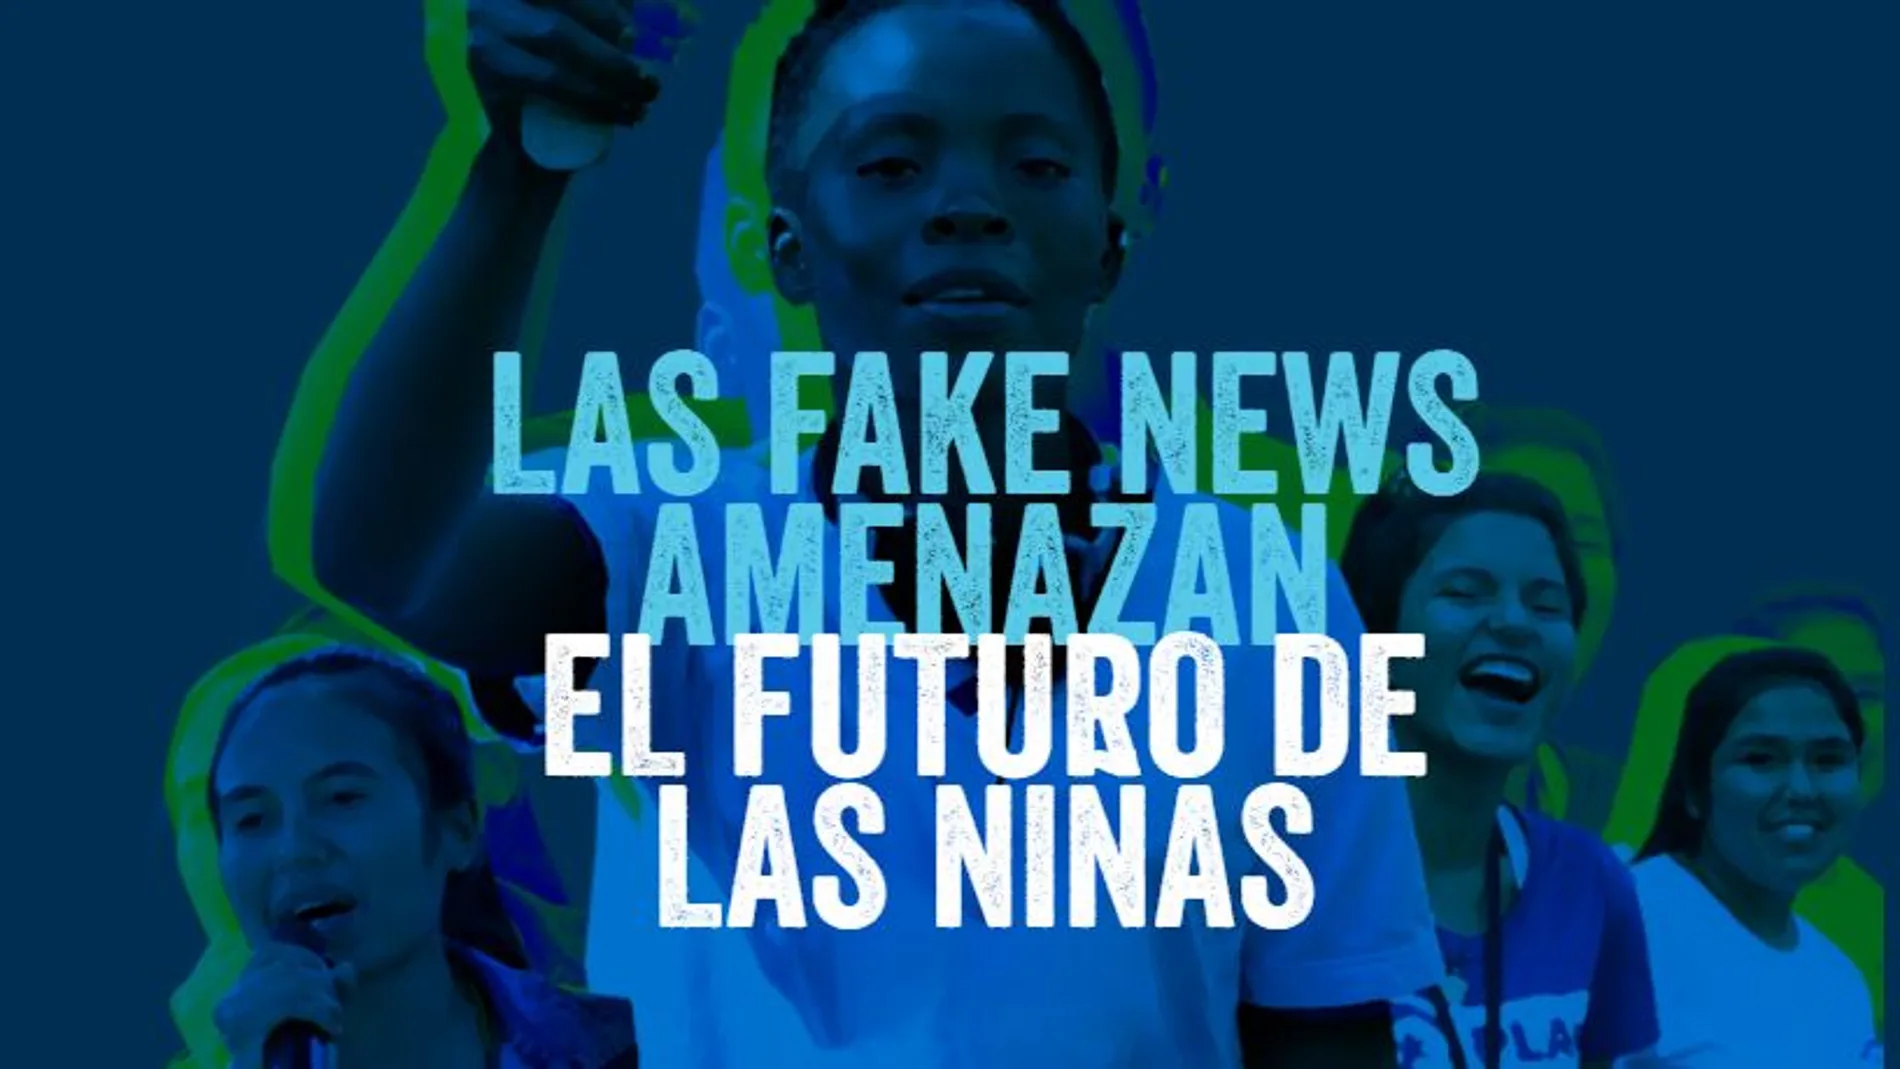 Las fake news amenazan el futuro de las niñas, según un estudio de Plan International